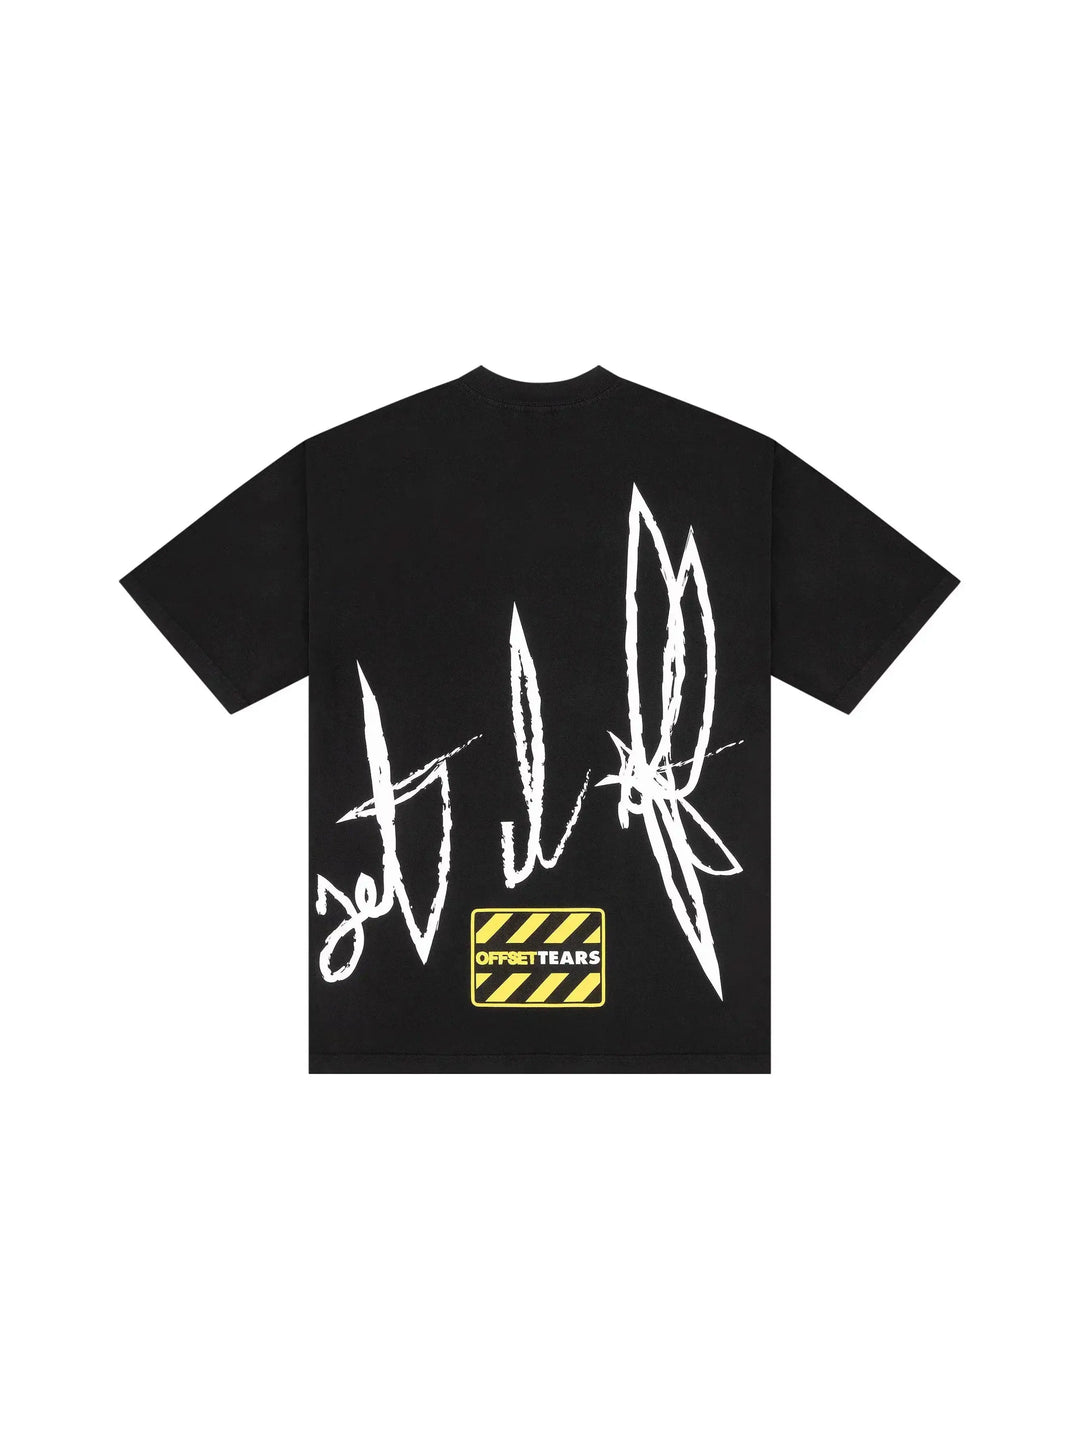 Denim Tears x Offset Set It Off #3 T-shirt Black in Auckland, New Zealand - Shop name